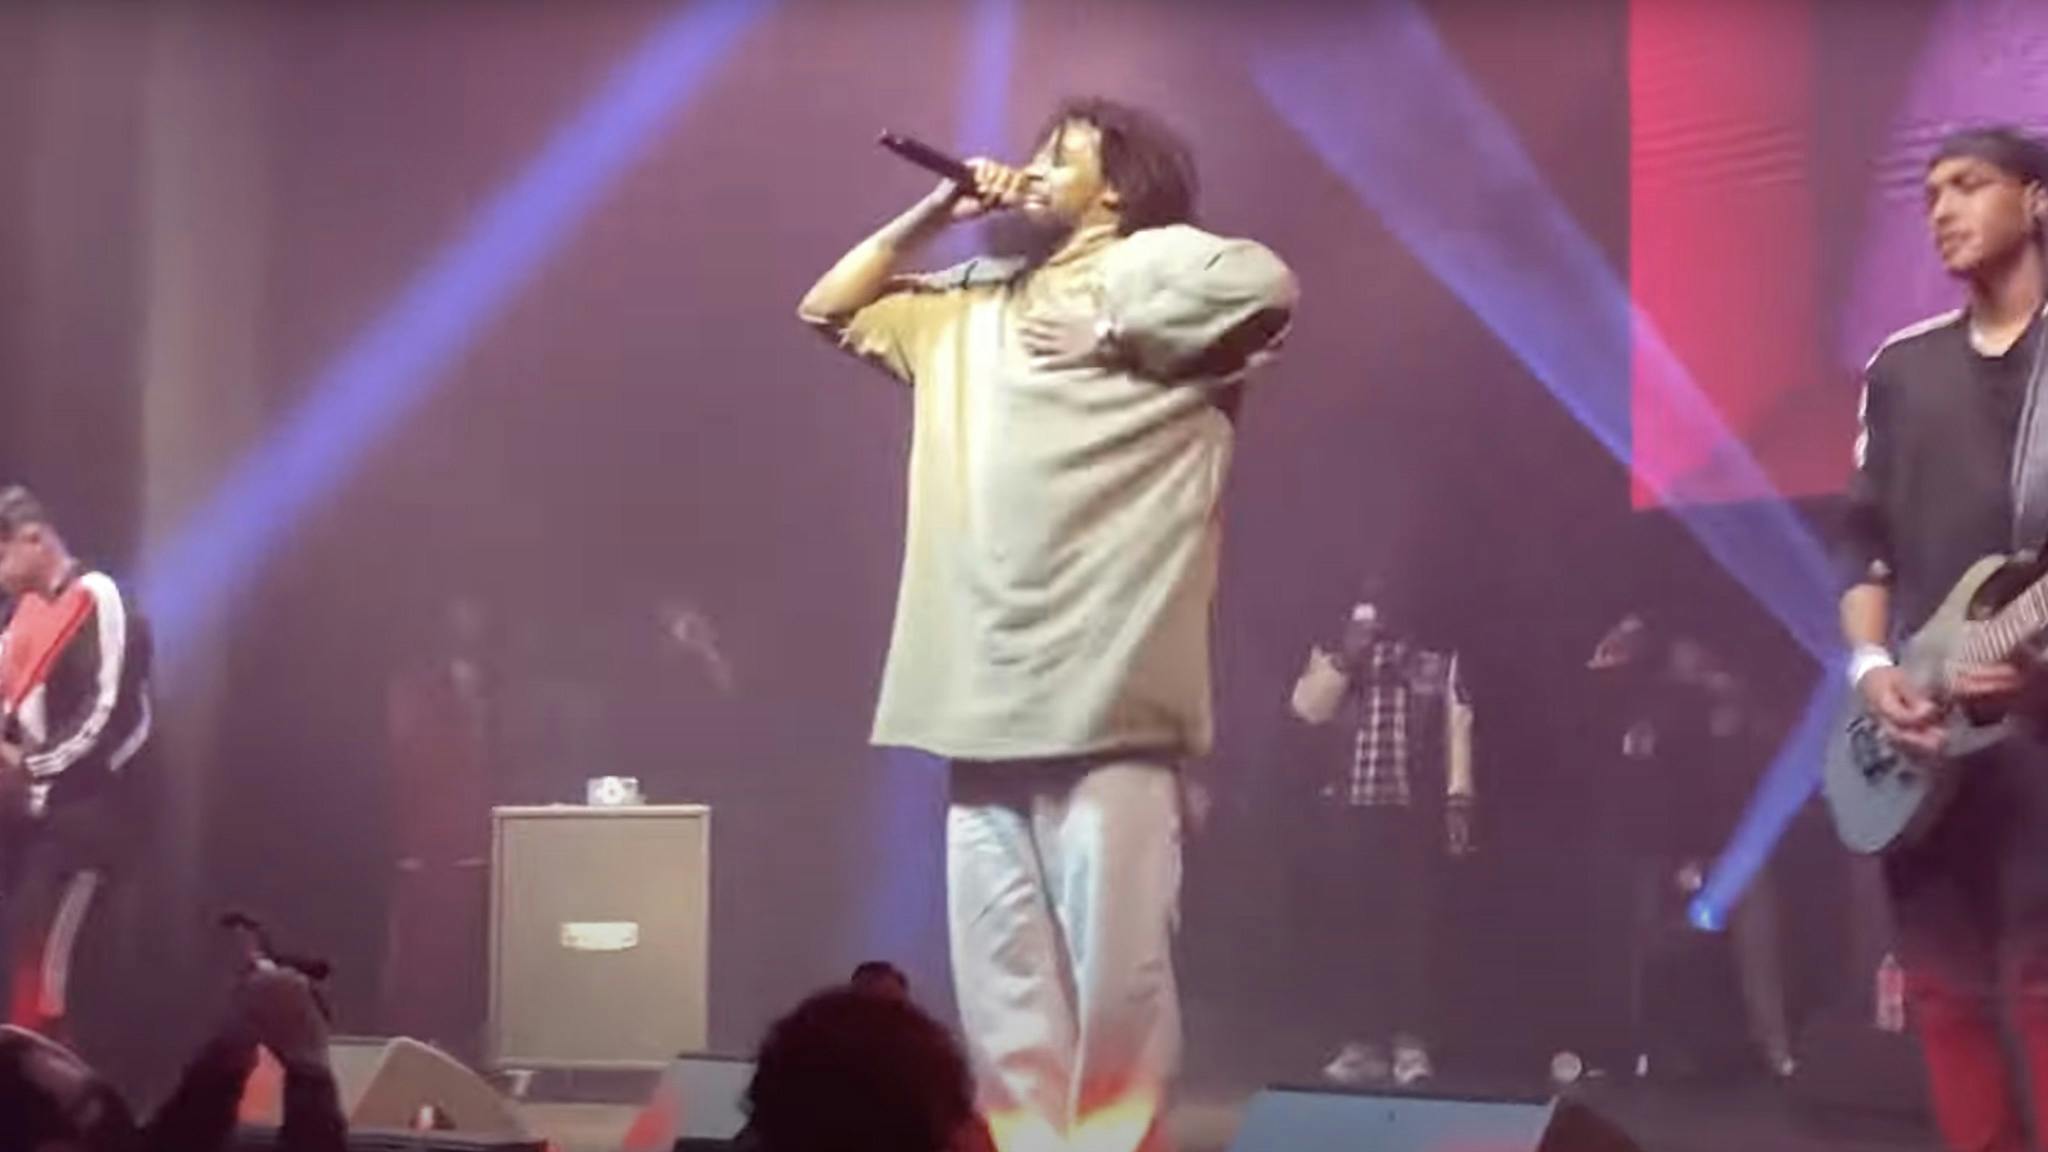 Watch rapper Danny Brown cover Korn’s Freak On A Leash live